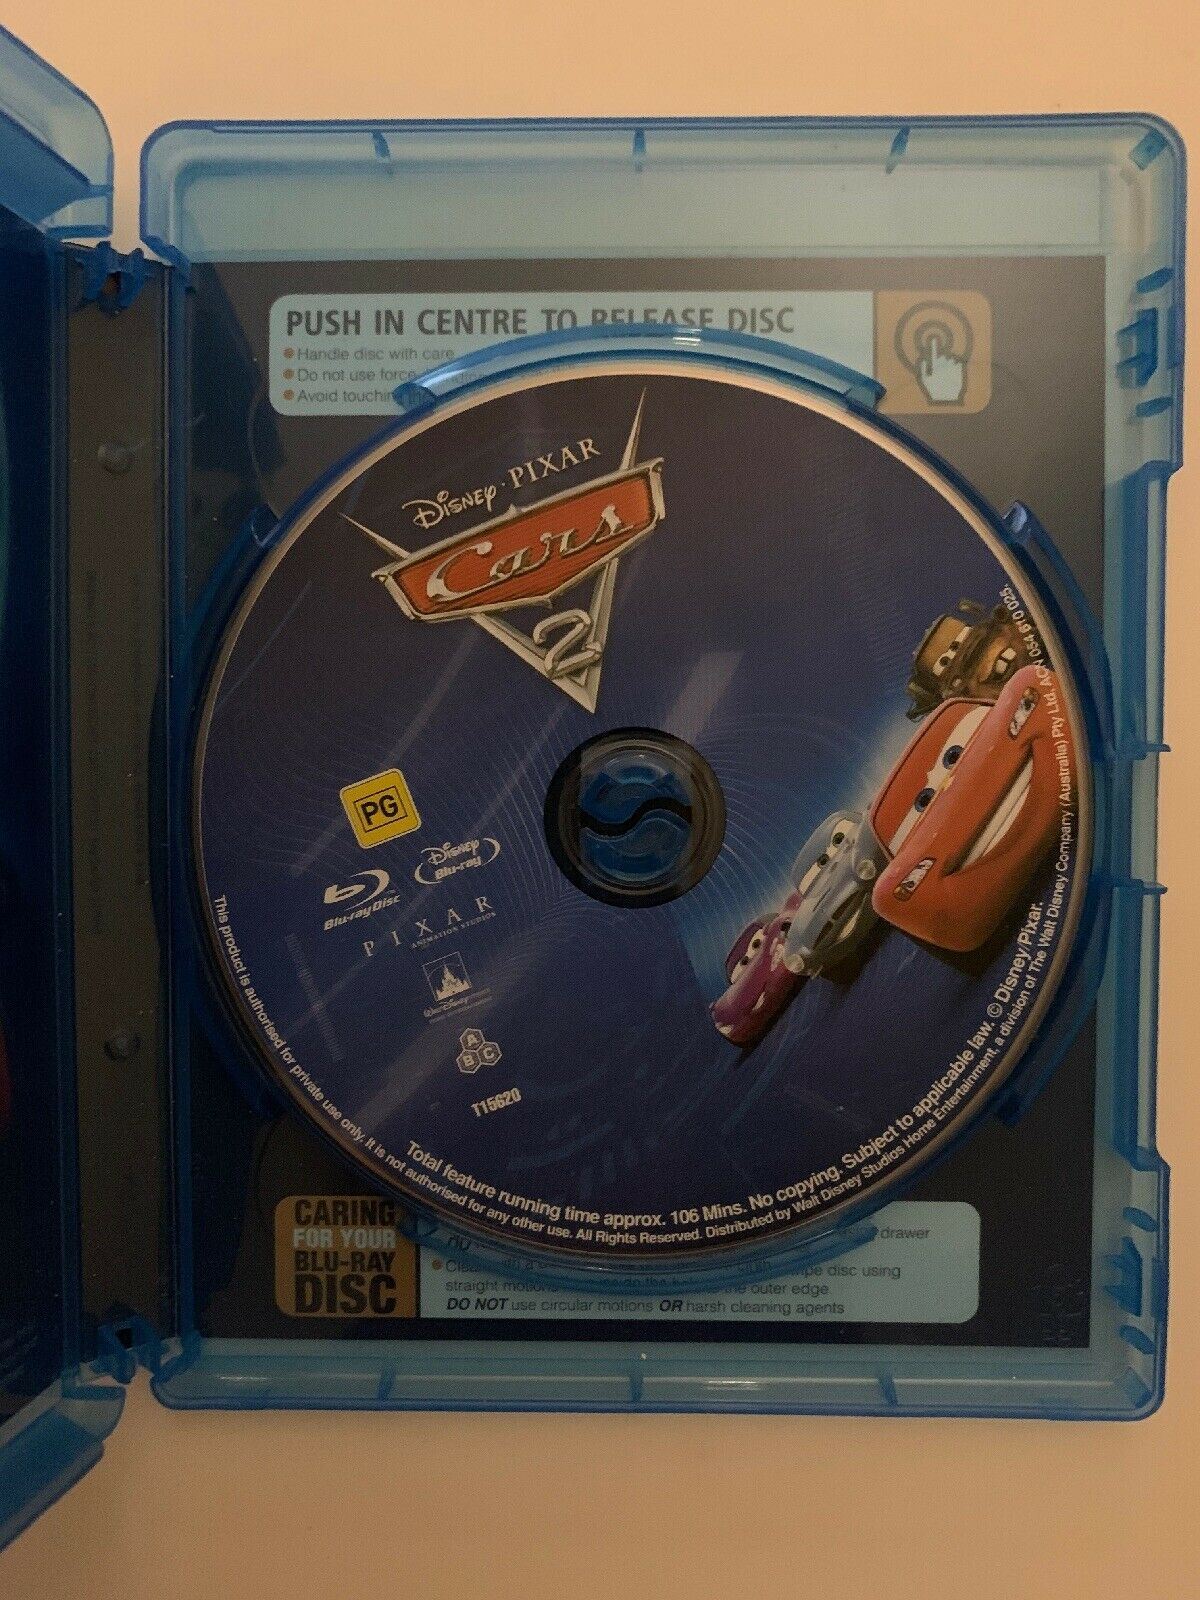 Cars 2 (Blu-ray, 2011) Disney Pixar Animation Family Movie. Region B